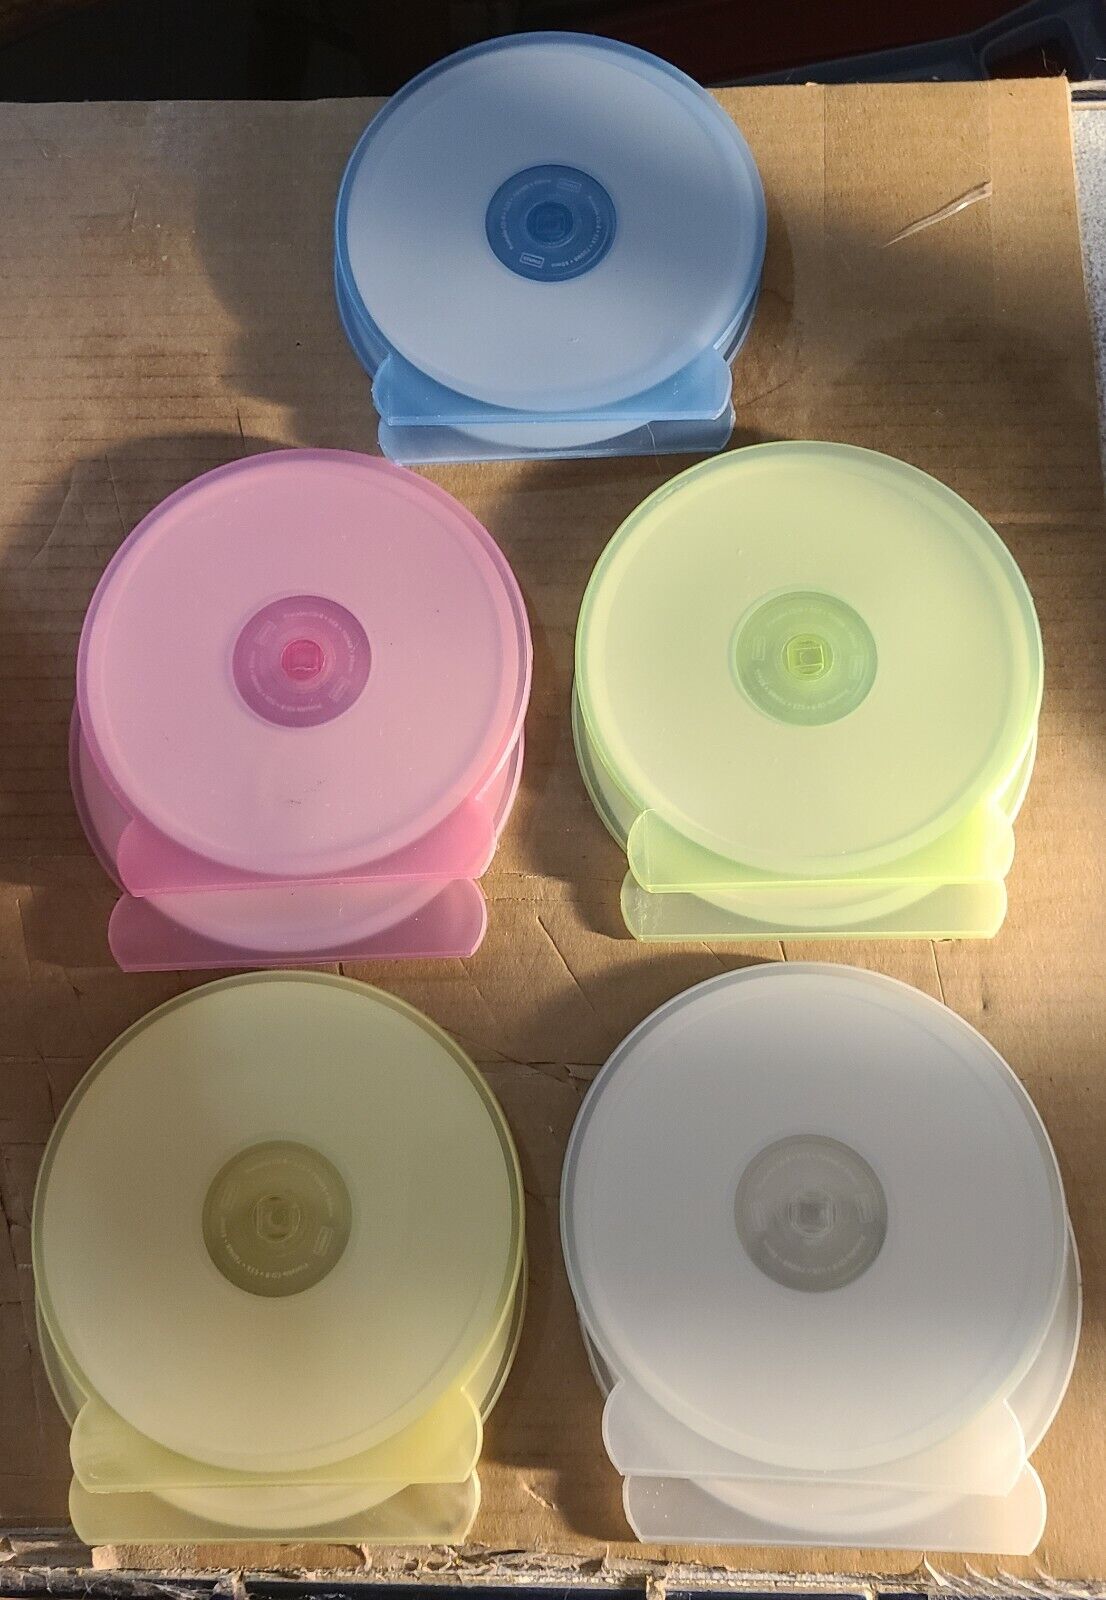 Staples 10 Pack CD-R Printable Discs w Colored Sleeve Cases Unused